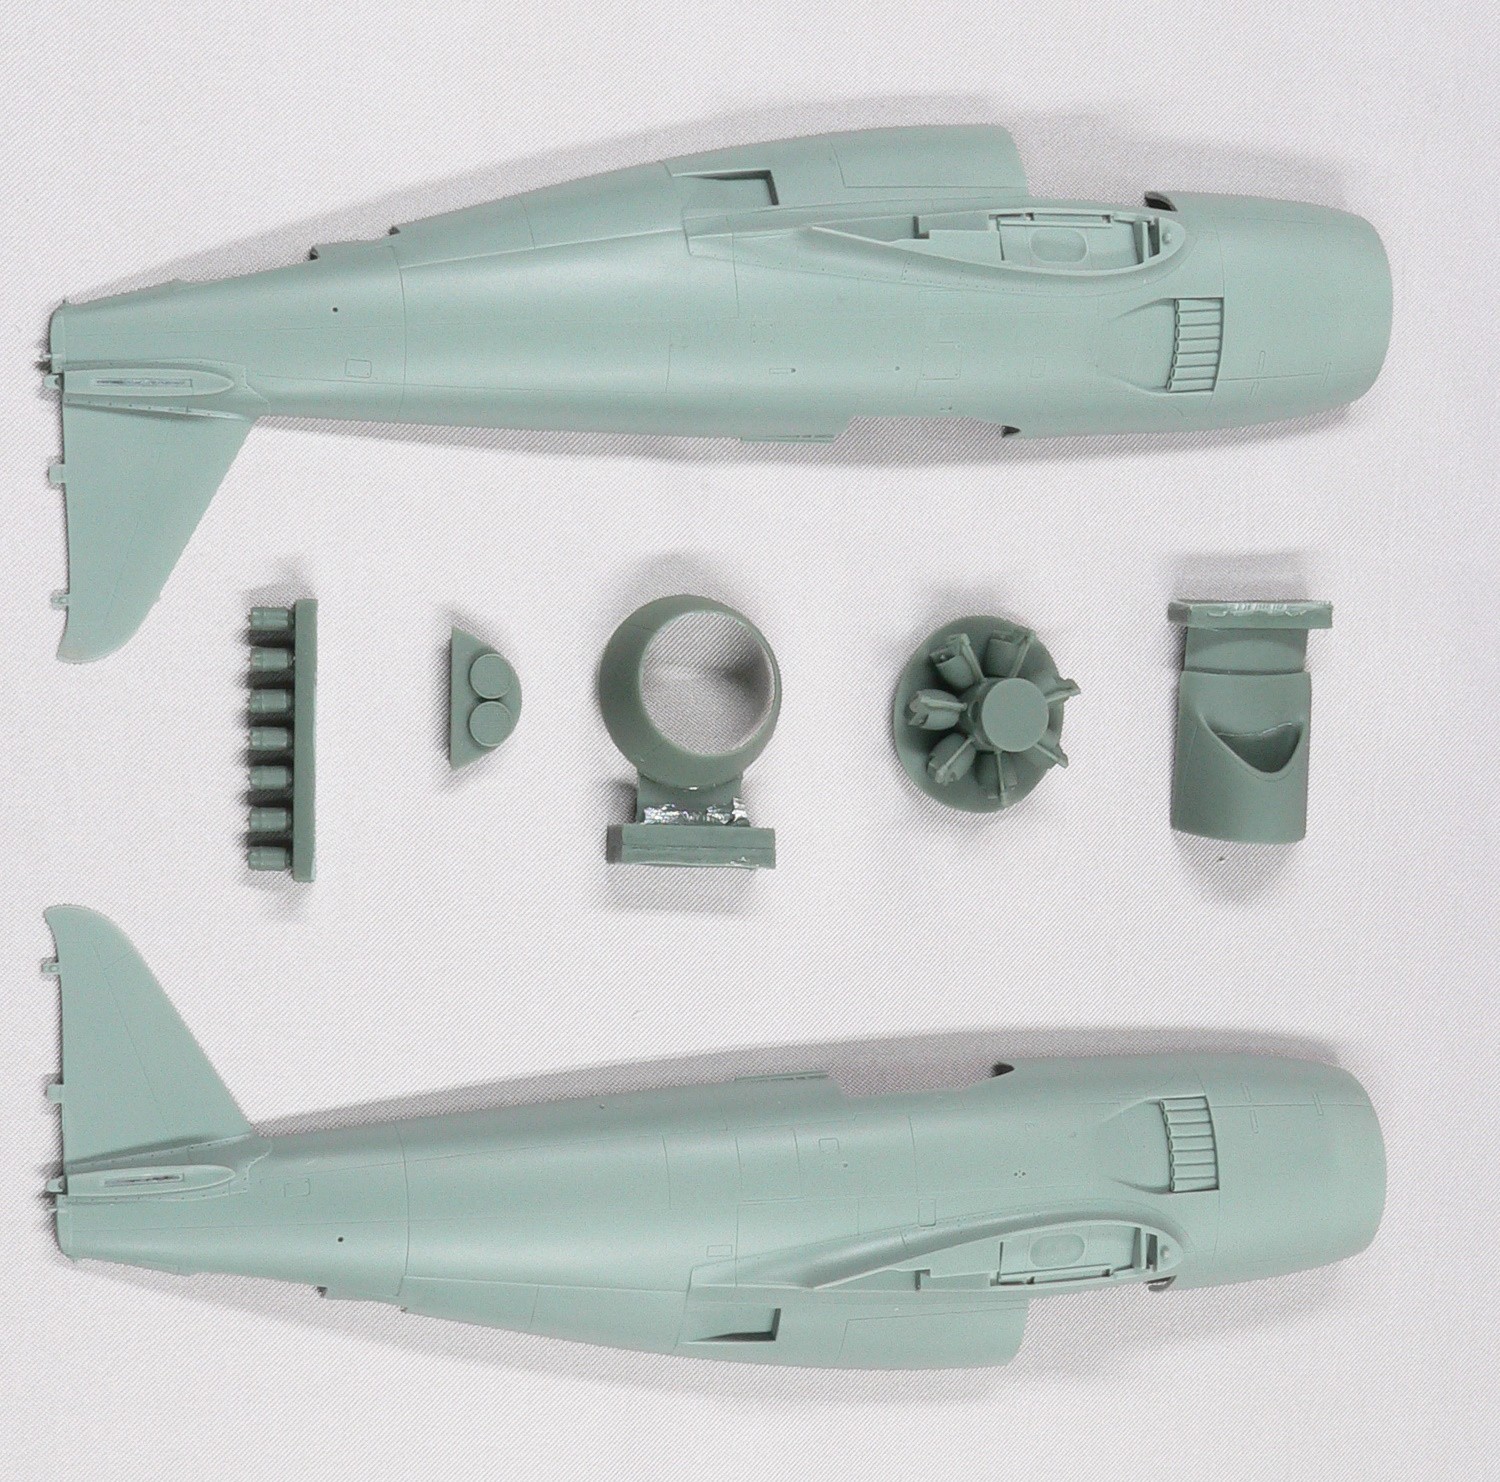 Halberd Models XP-72 Ultrabolt Test parts-1